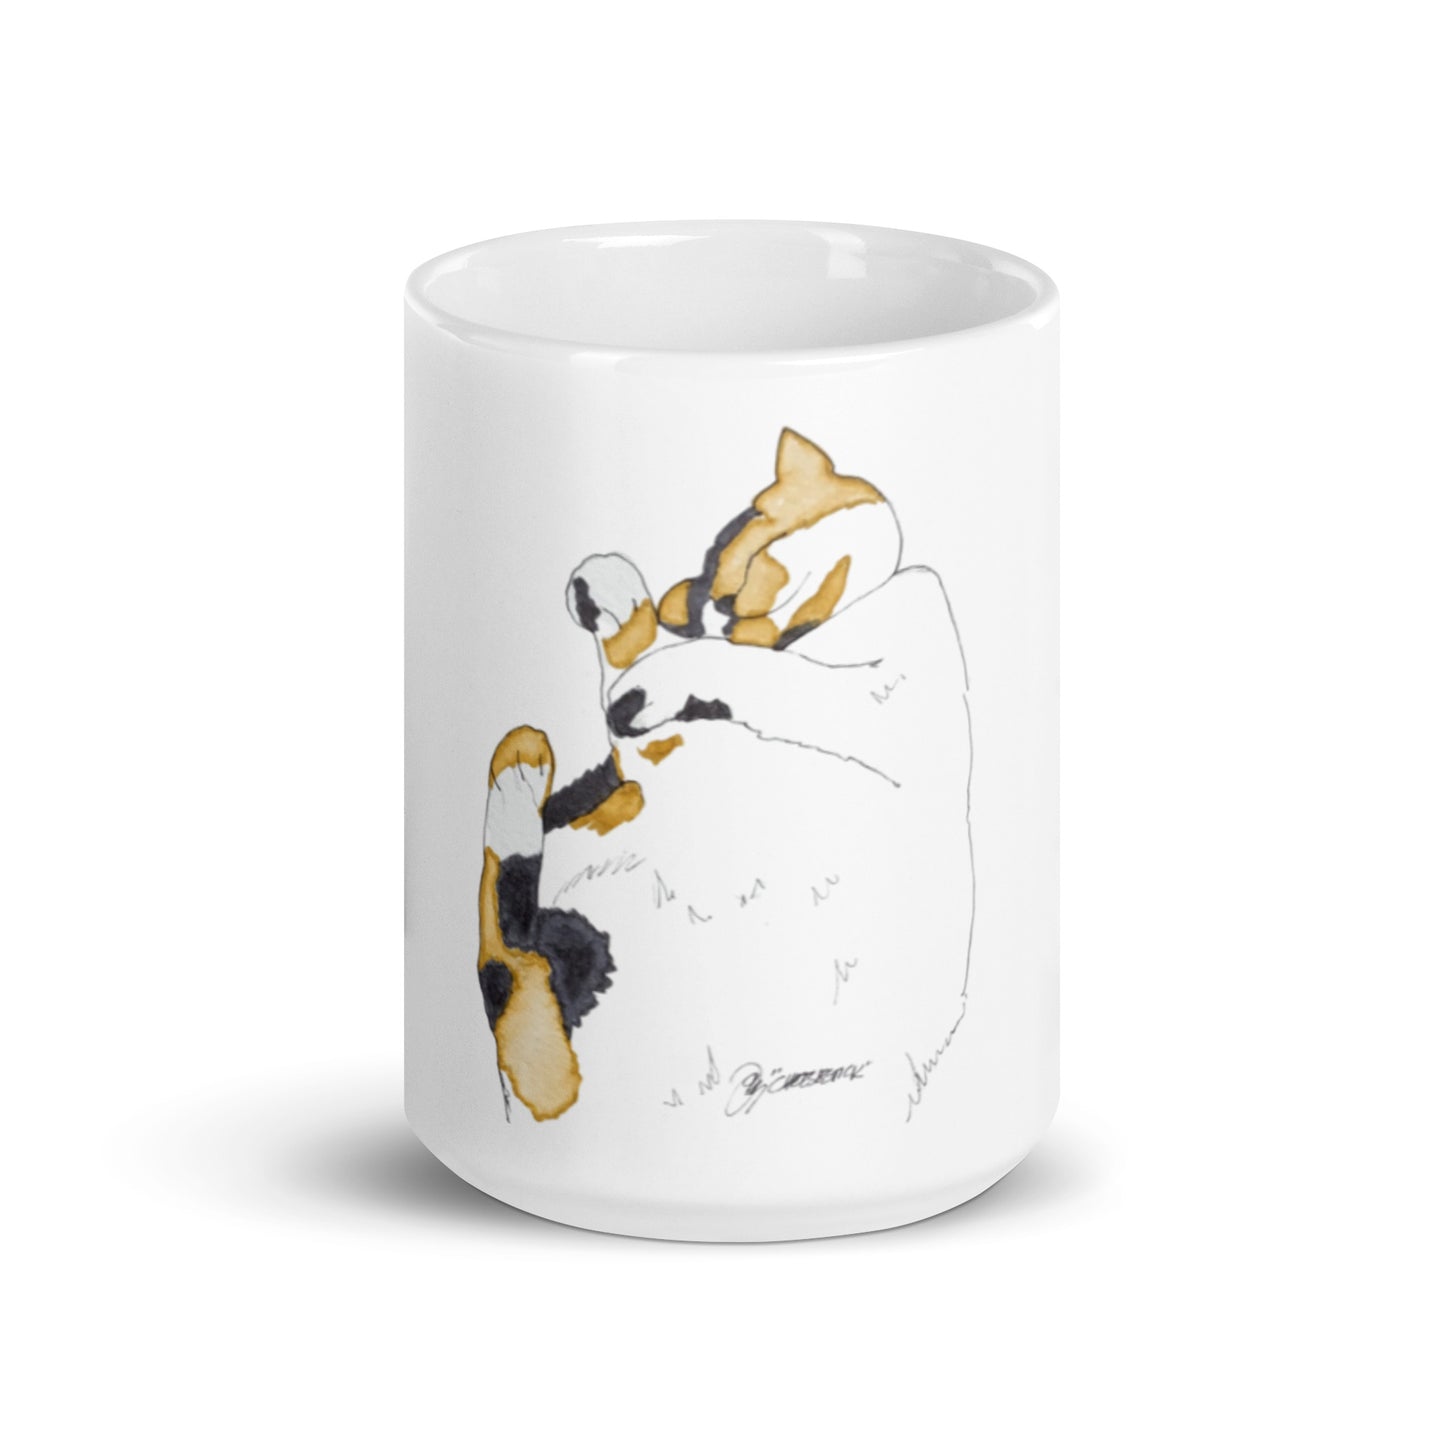 Sleeping Kitty White glossy mug